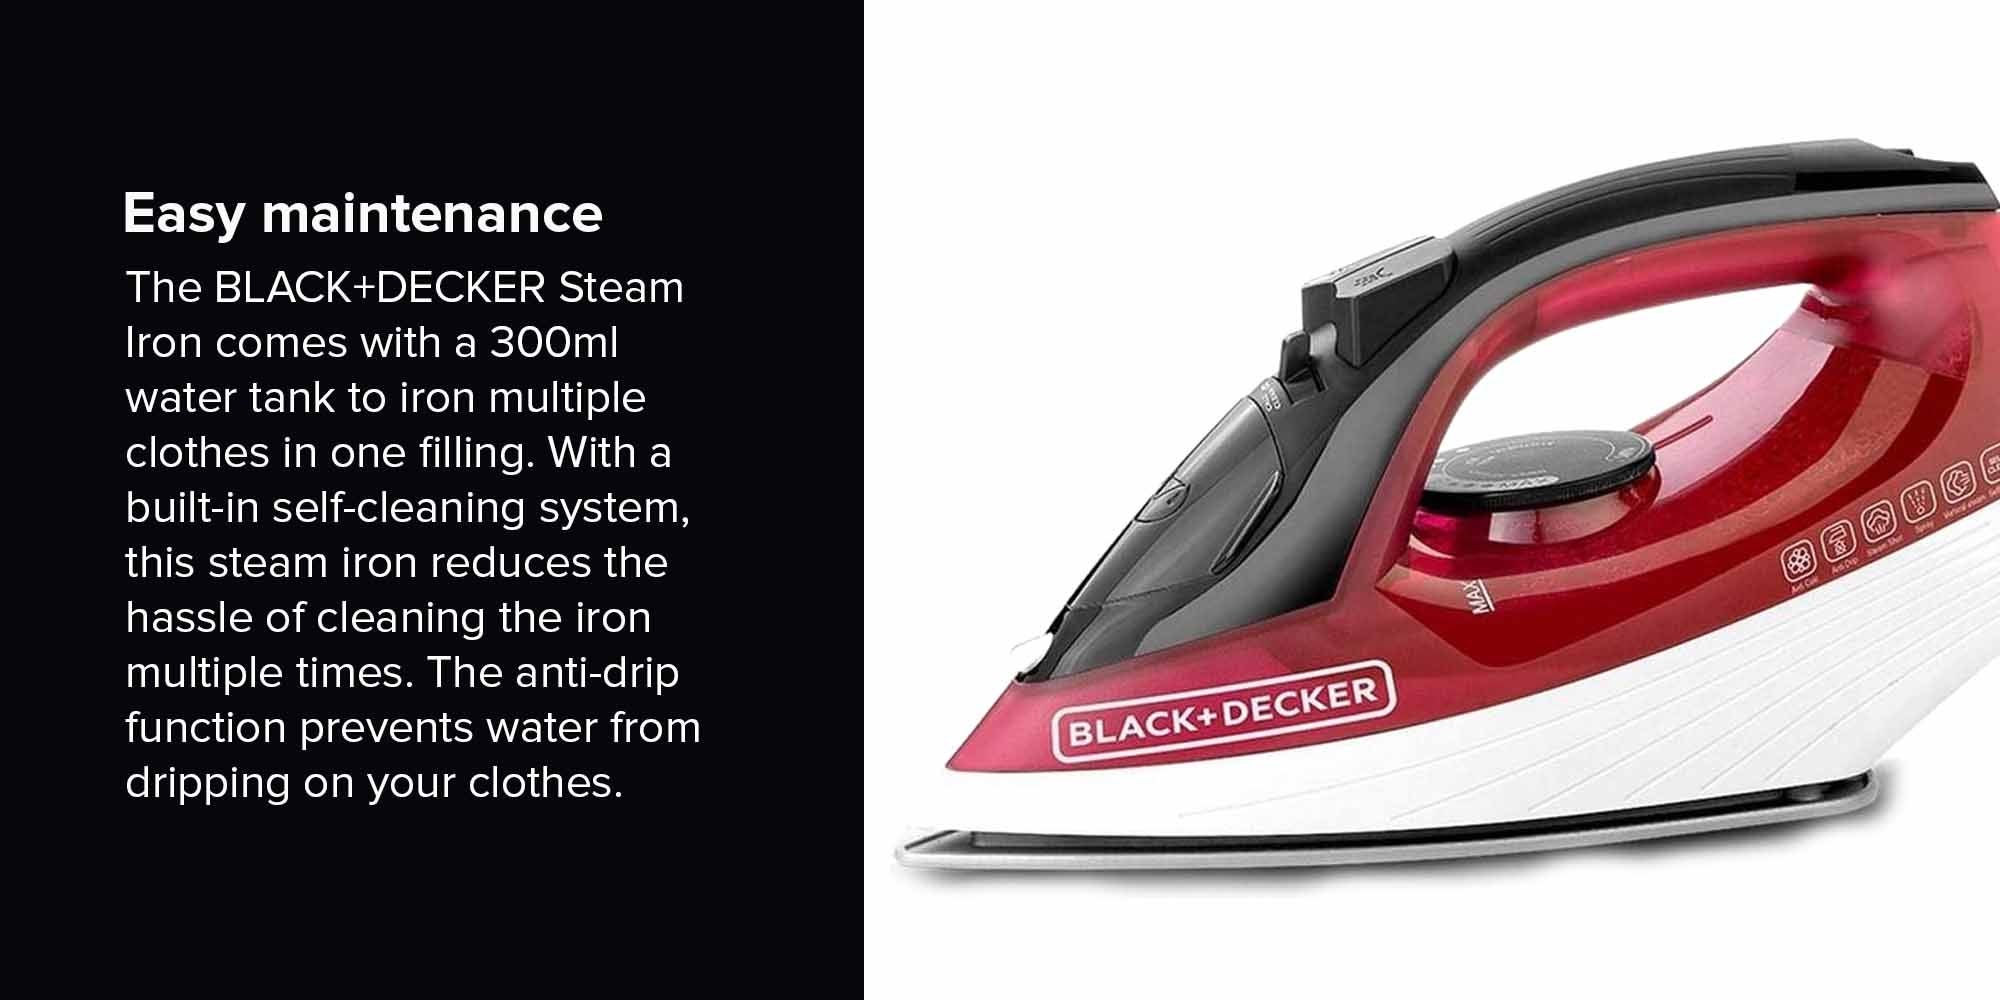 Black & Decker Dry Iron With Aluminum Base, F300-b5 price in UAE,   UAE